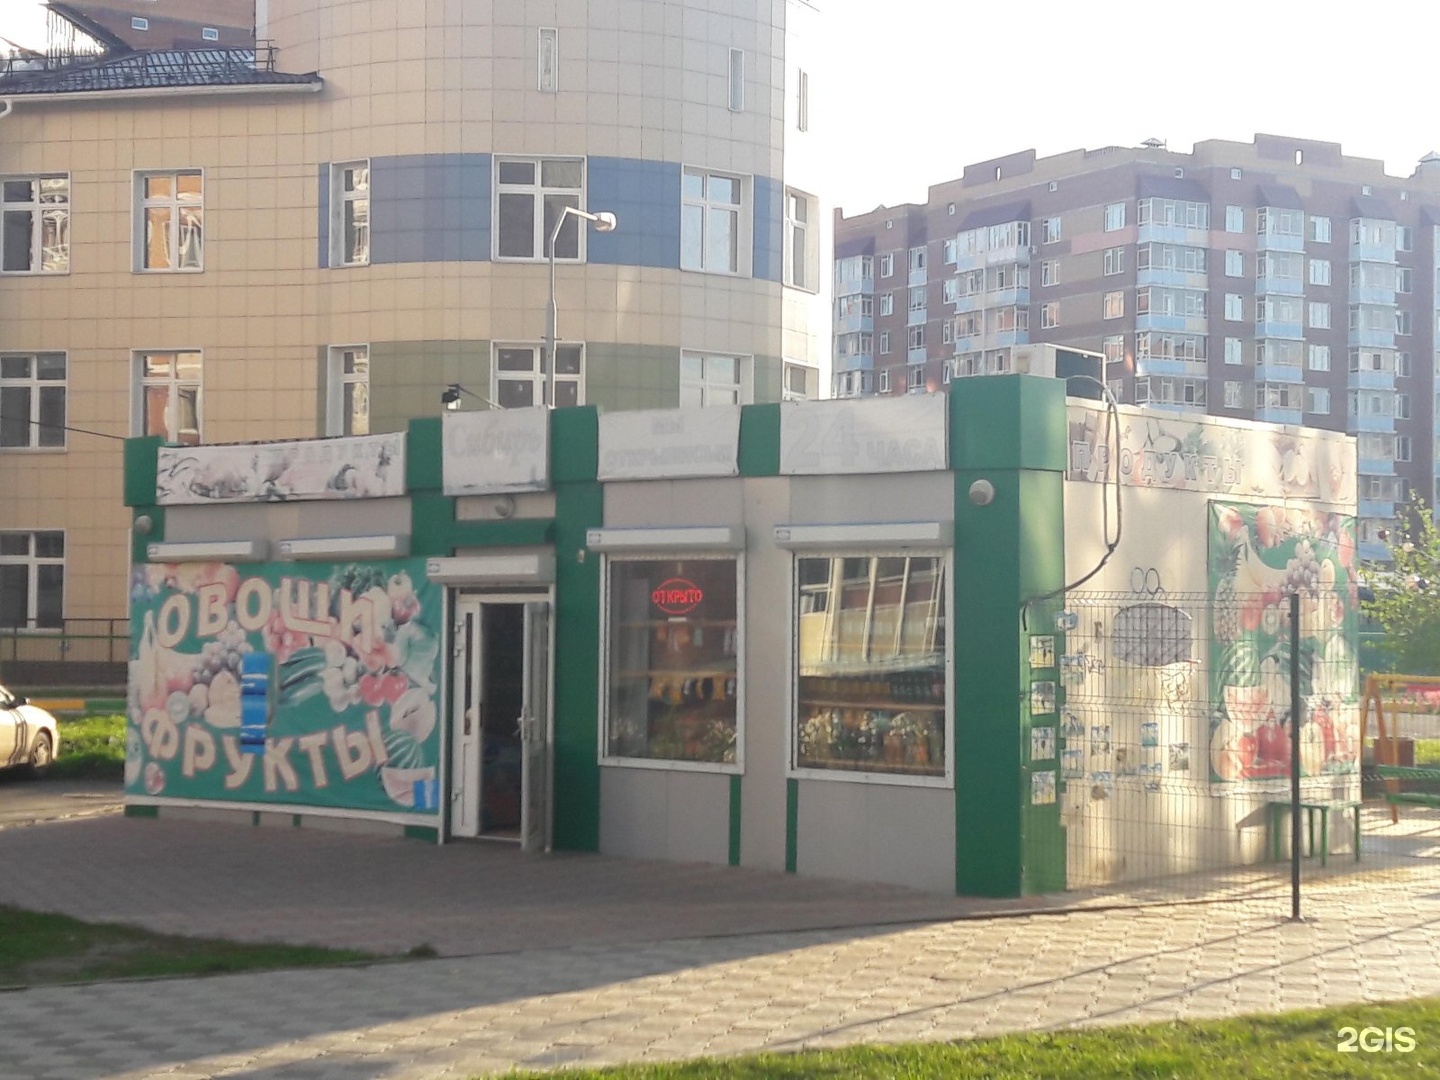 Магазин Сибирь В Красноярске Каталог